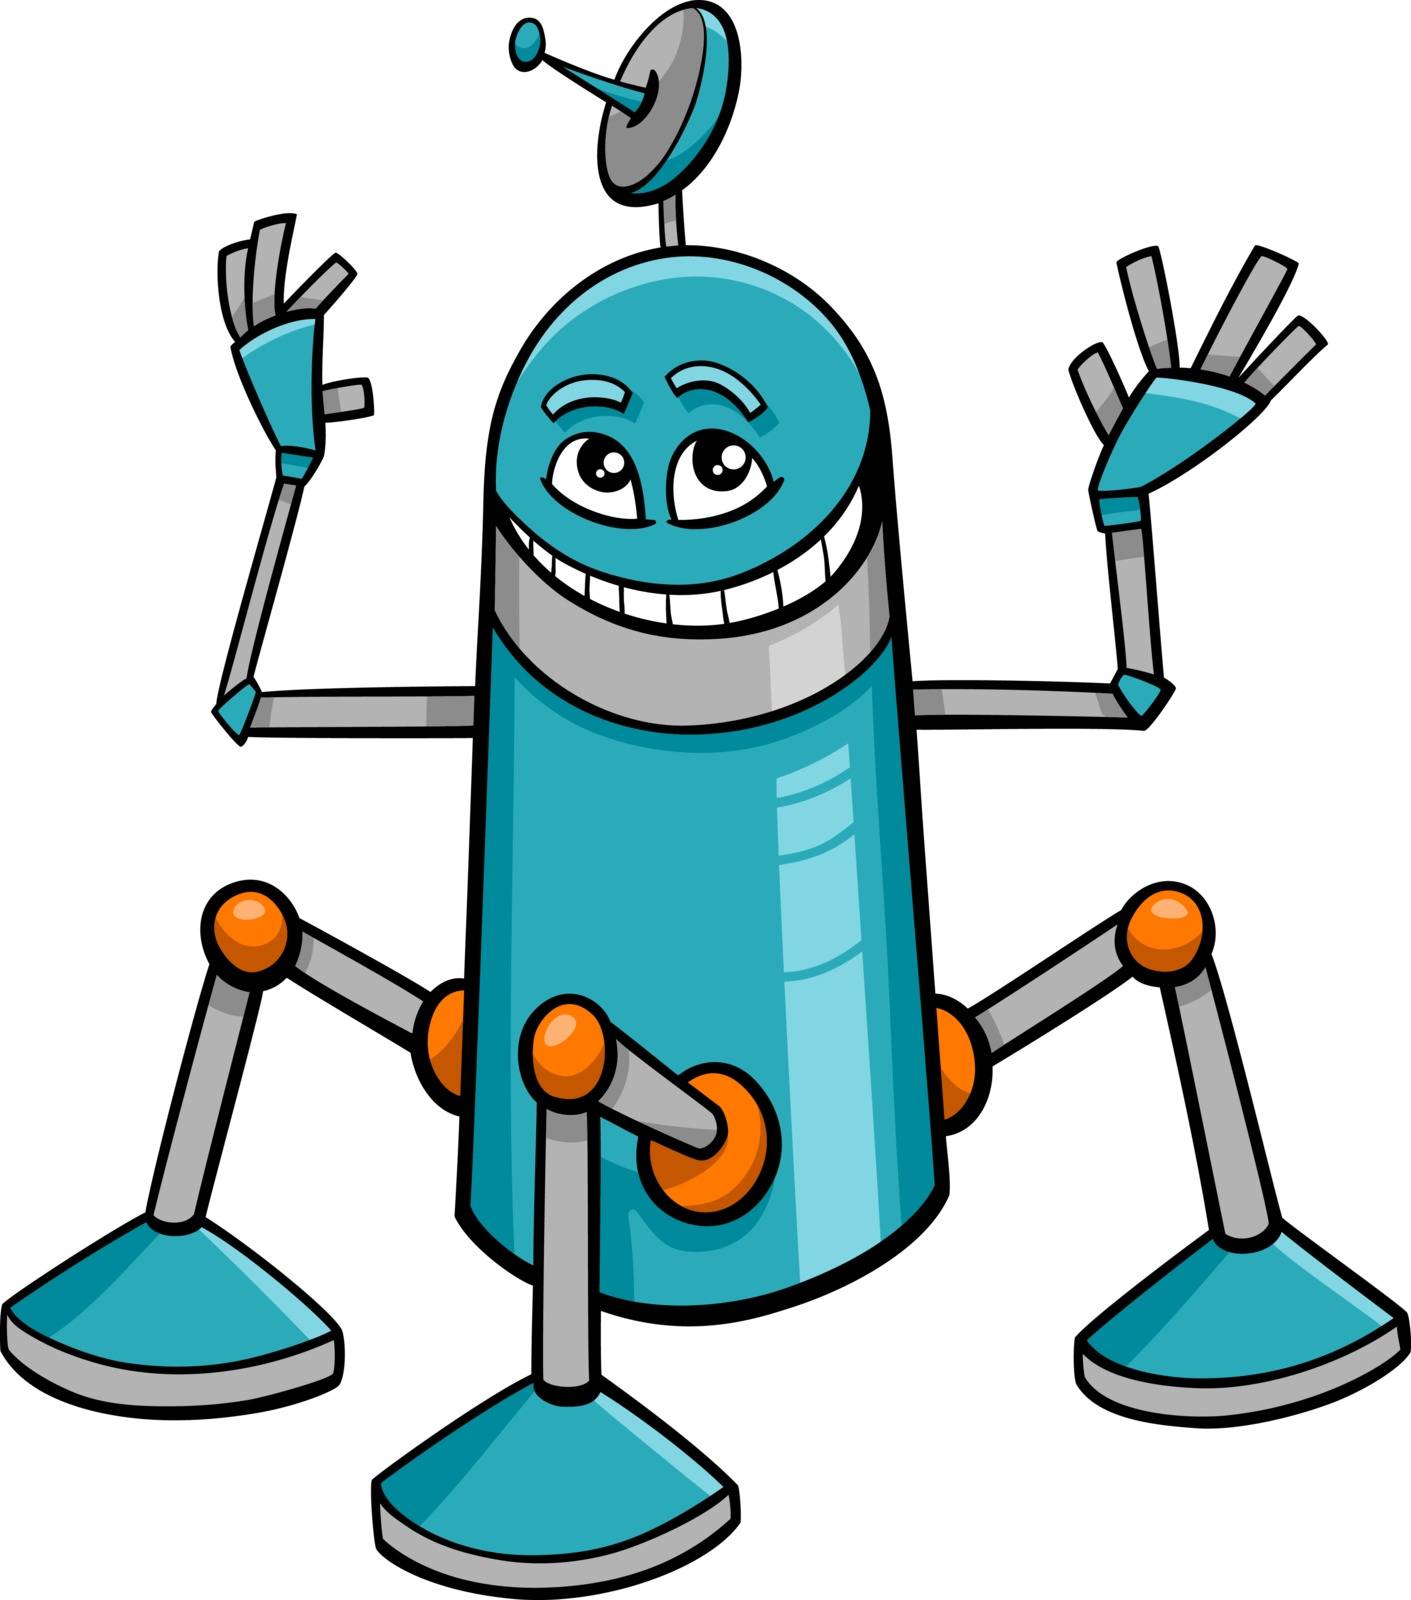 robot character cartoon by izakowski